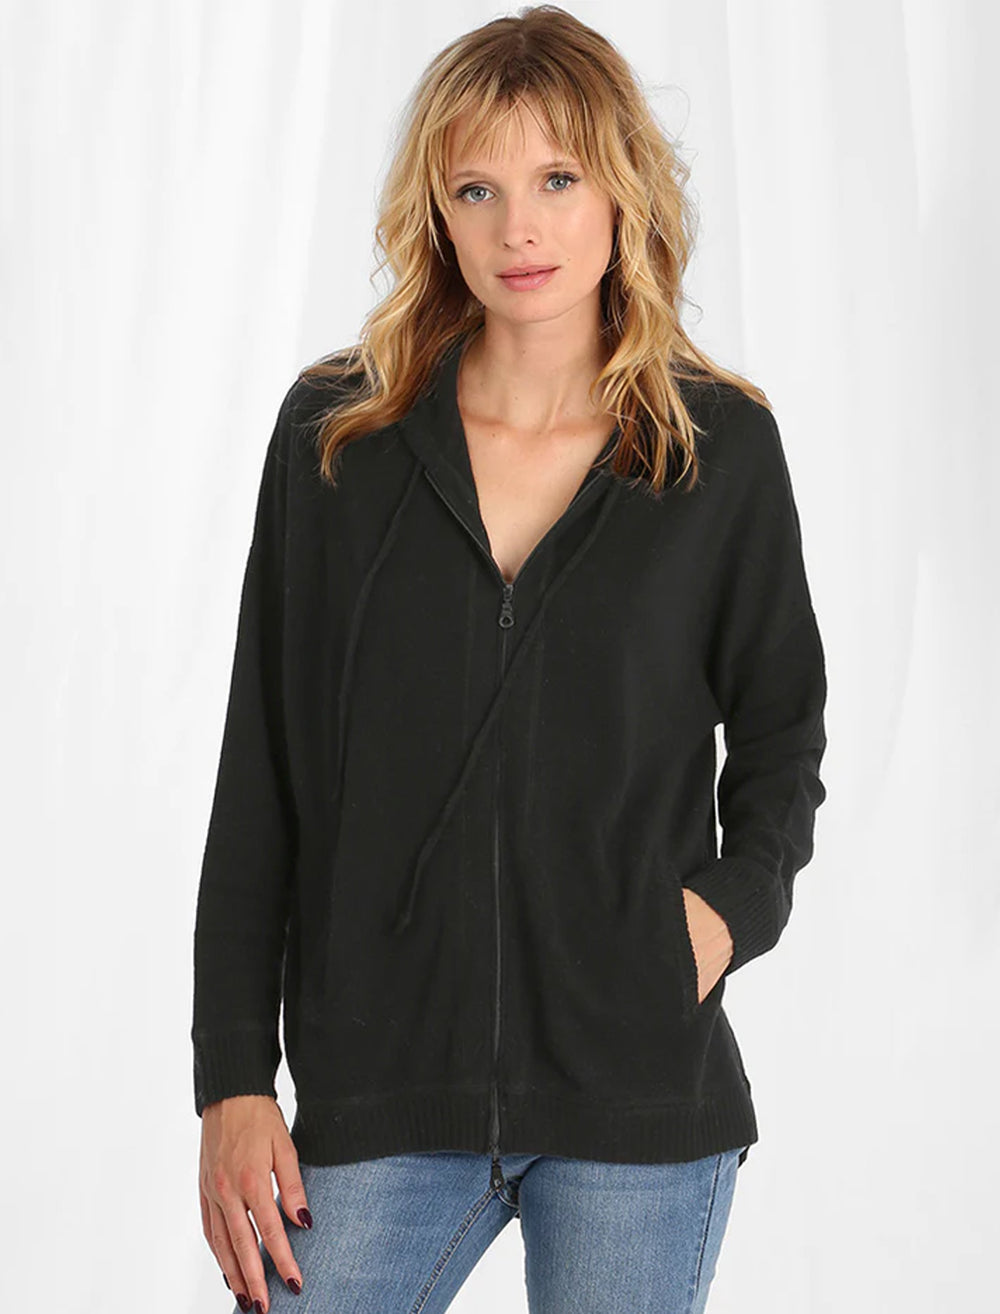 Model wearing Minnie Rose's cashmere oversize zip hoodie in black.